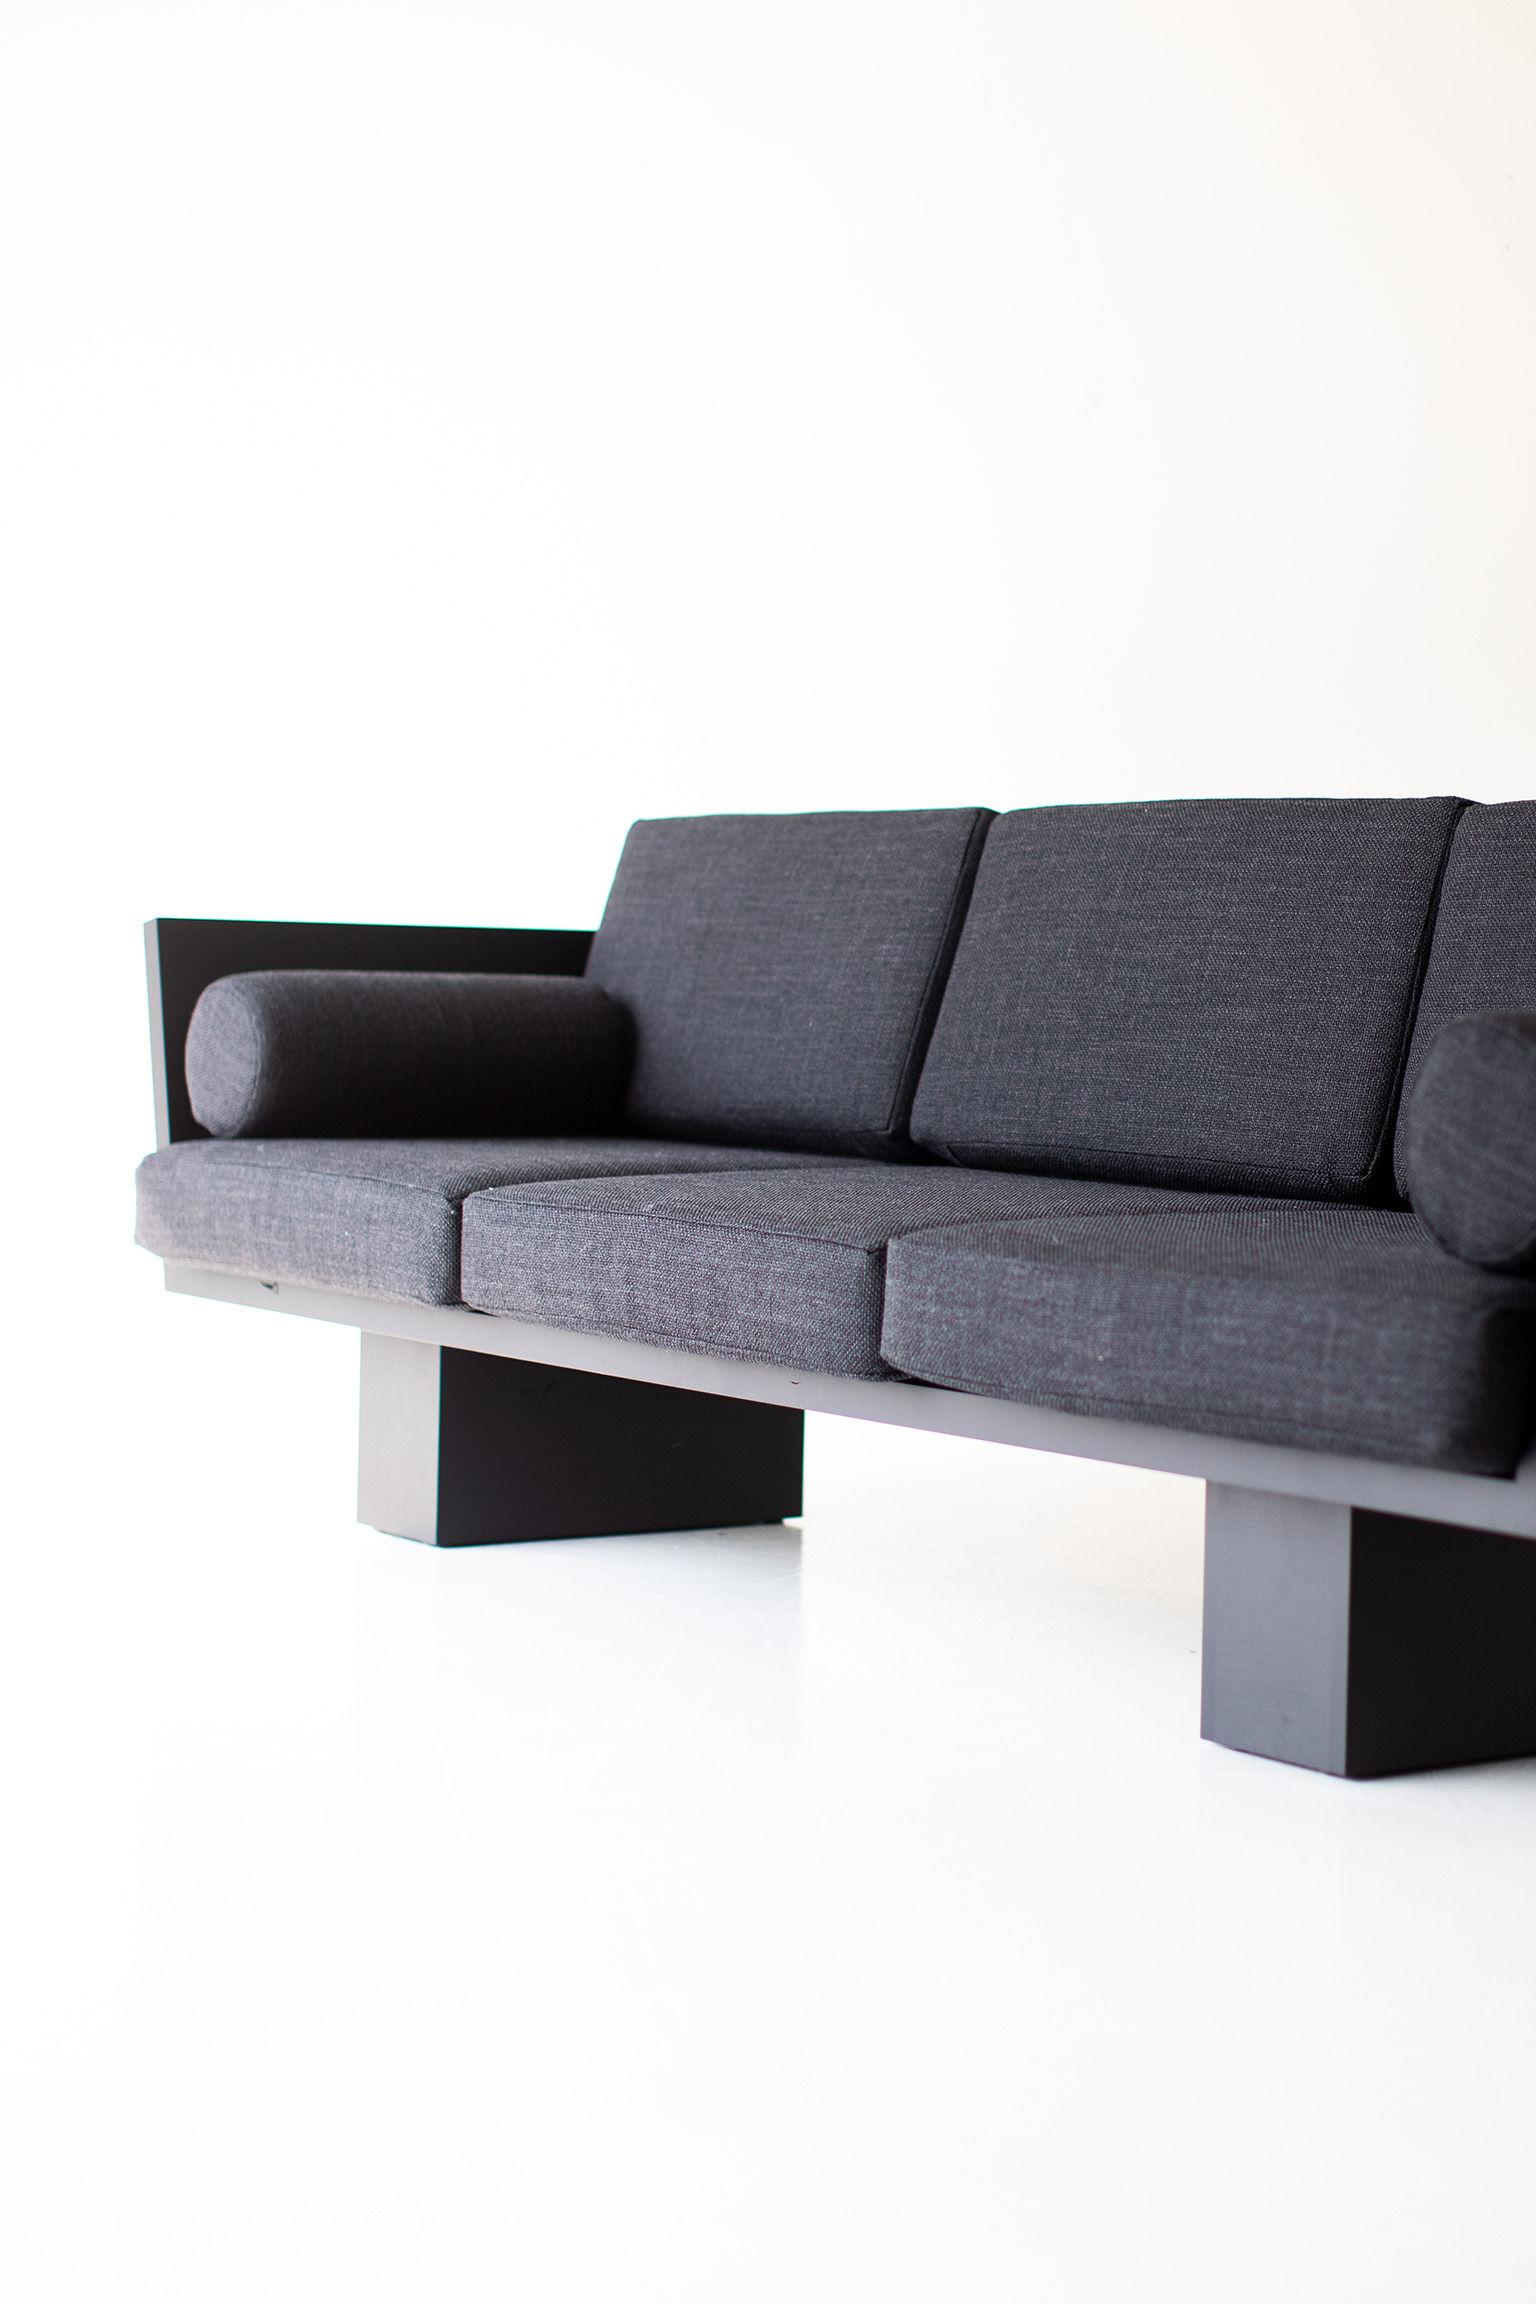 American Suelo Modern Outdoor Sofa For Sale